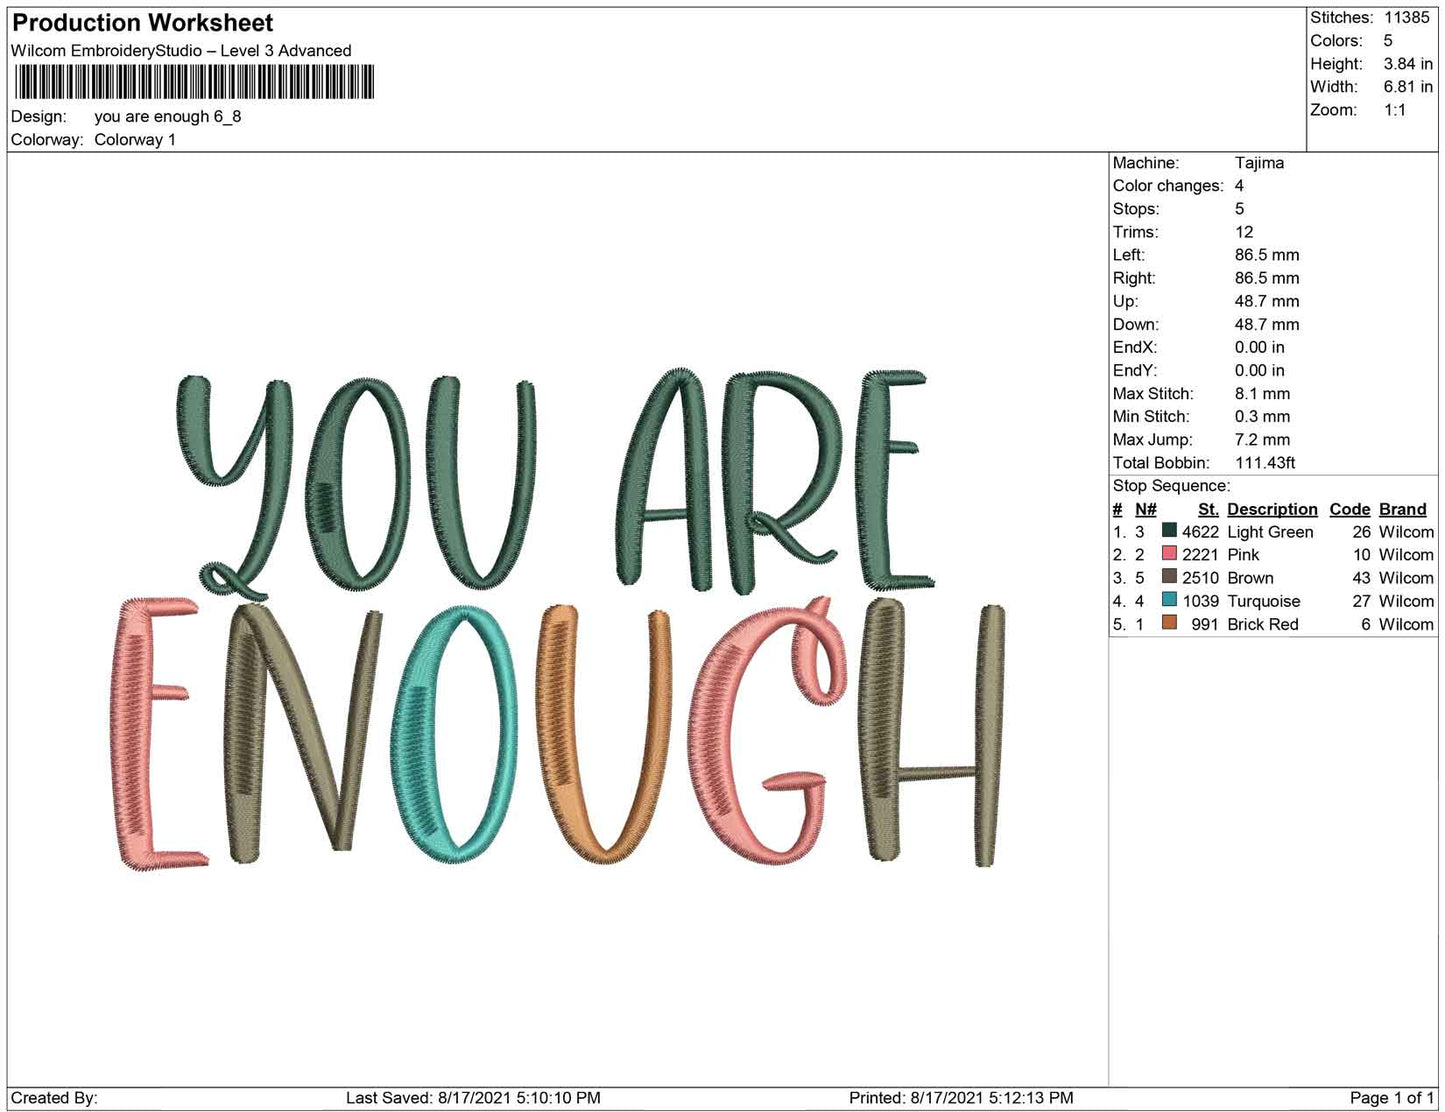 You are enough A